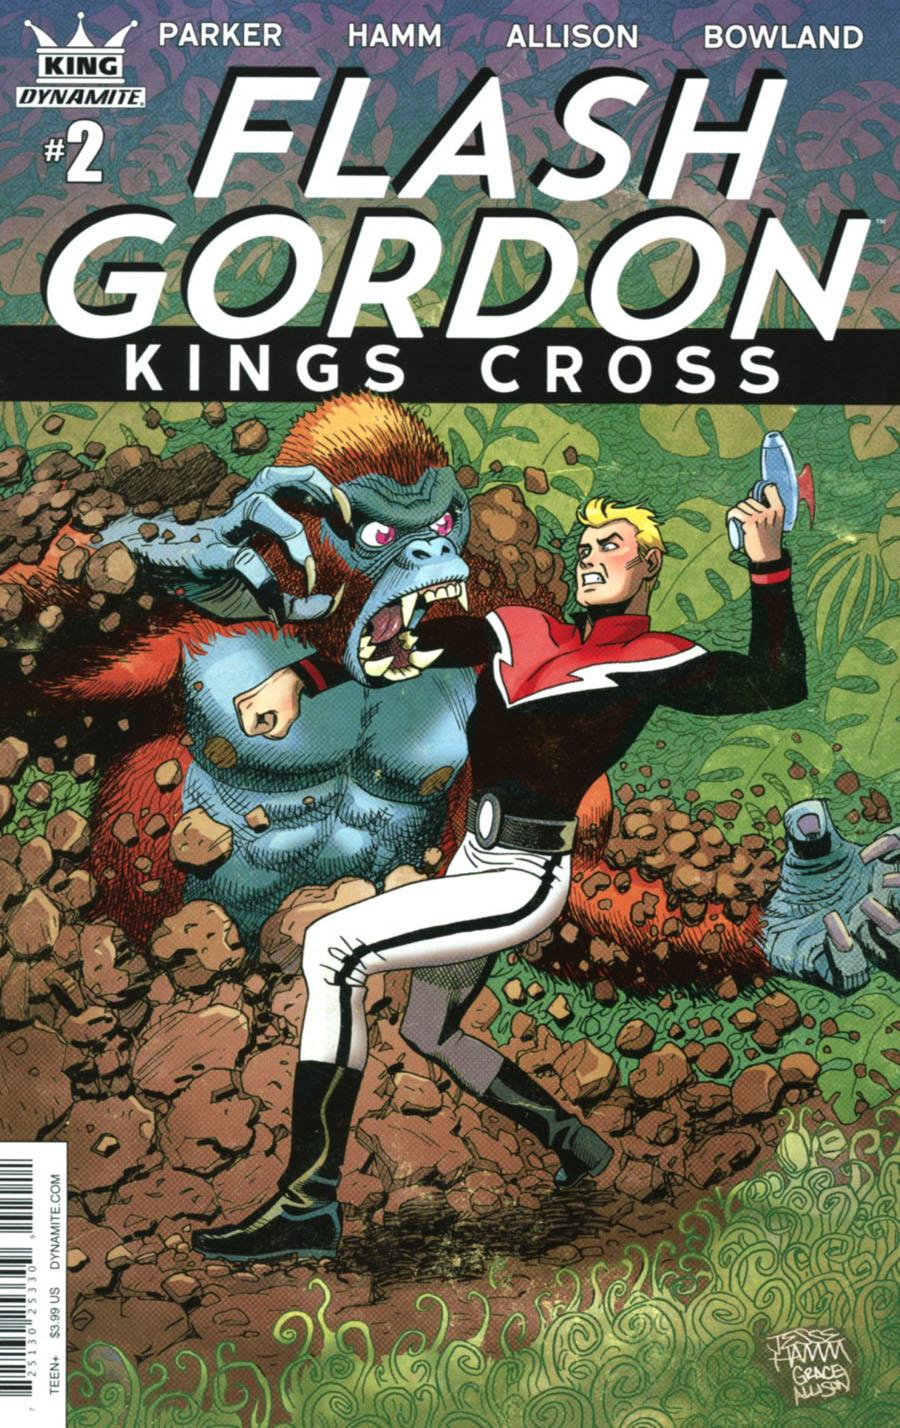 Flash Gordon Kings Cross Vol. 1 #2